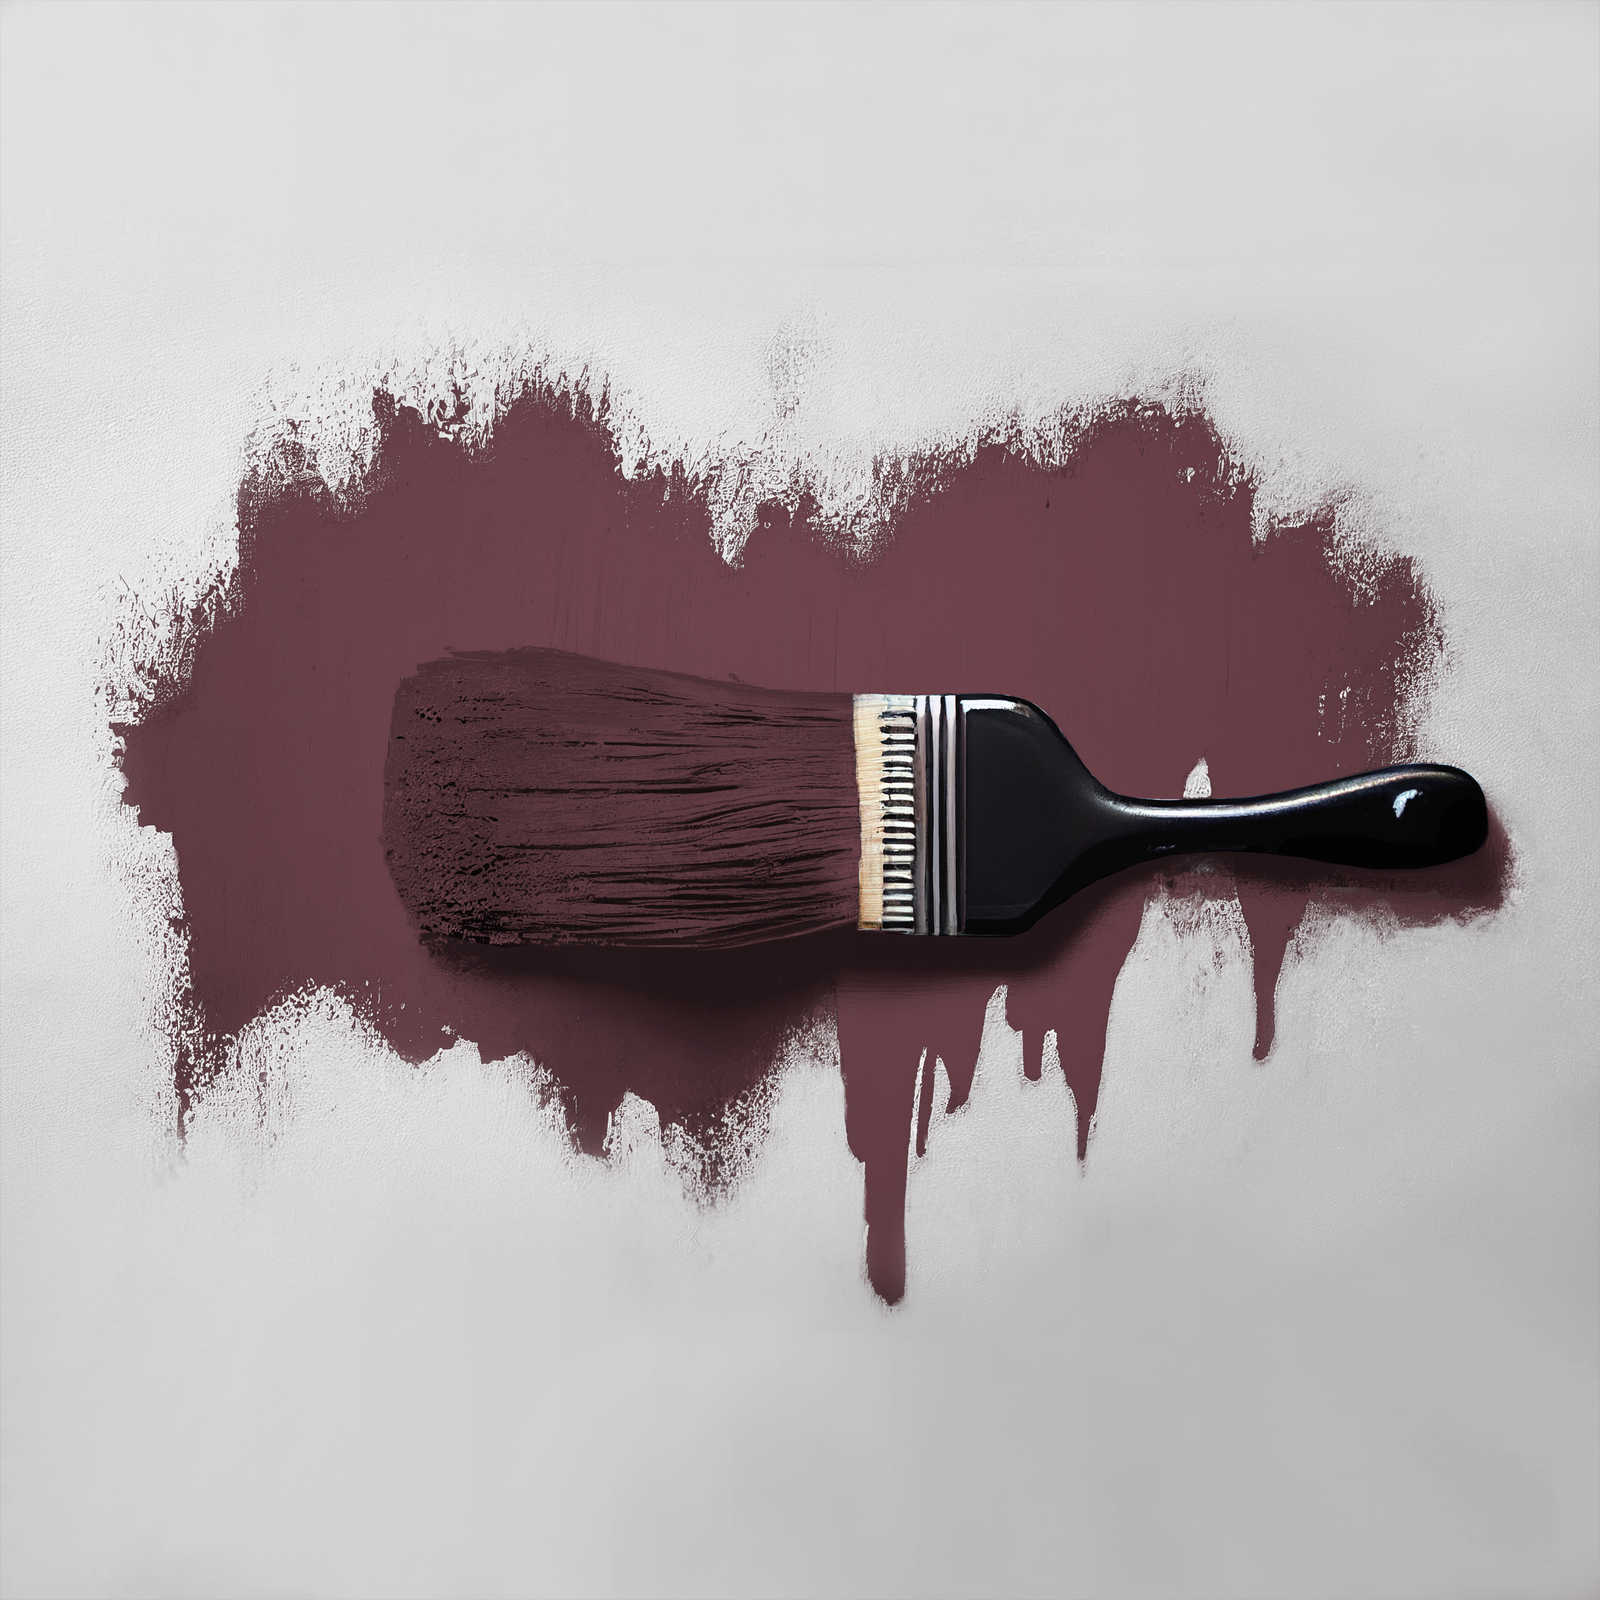             Pittura murale TCK7013 »Red Wine« in bordeaux intenso – 2,5 litri
        